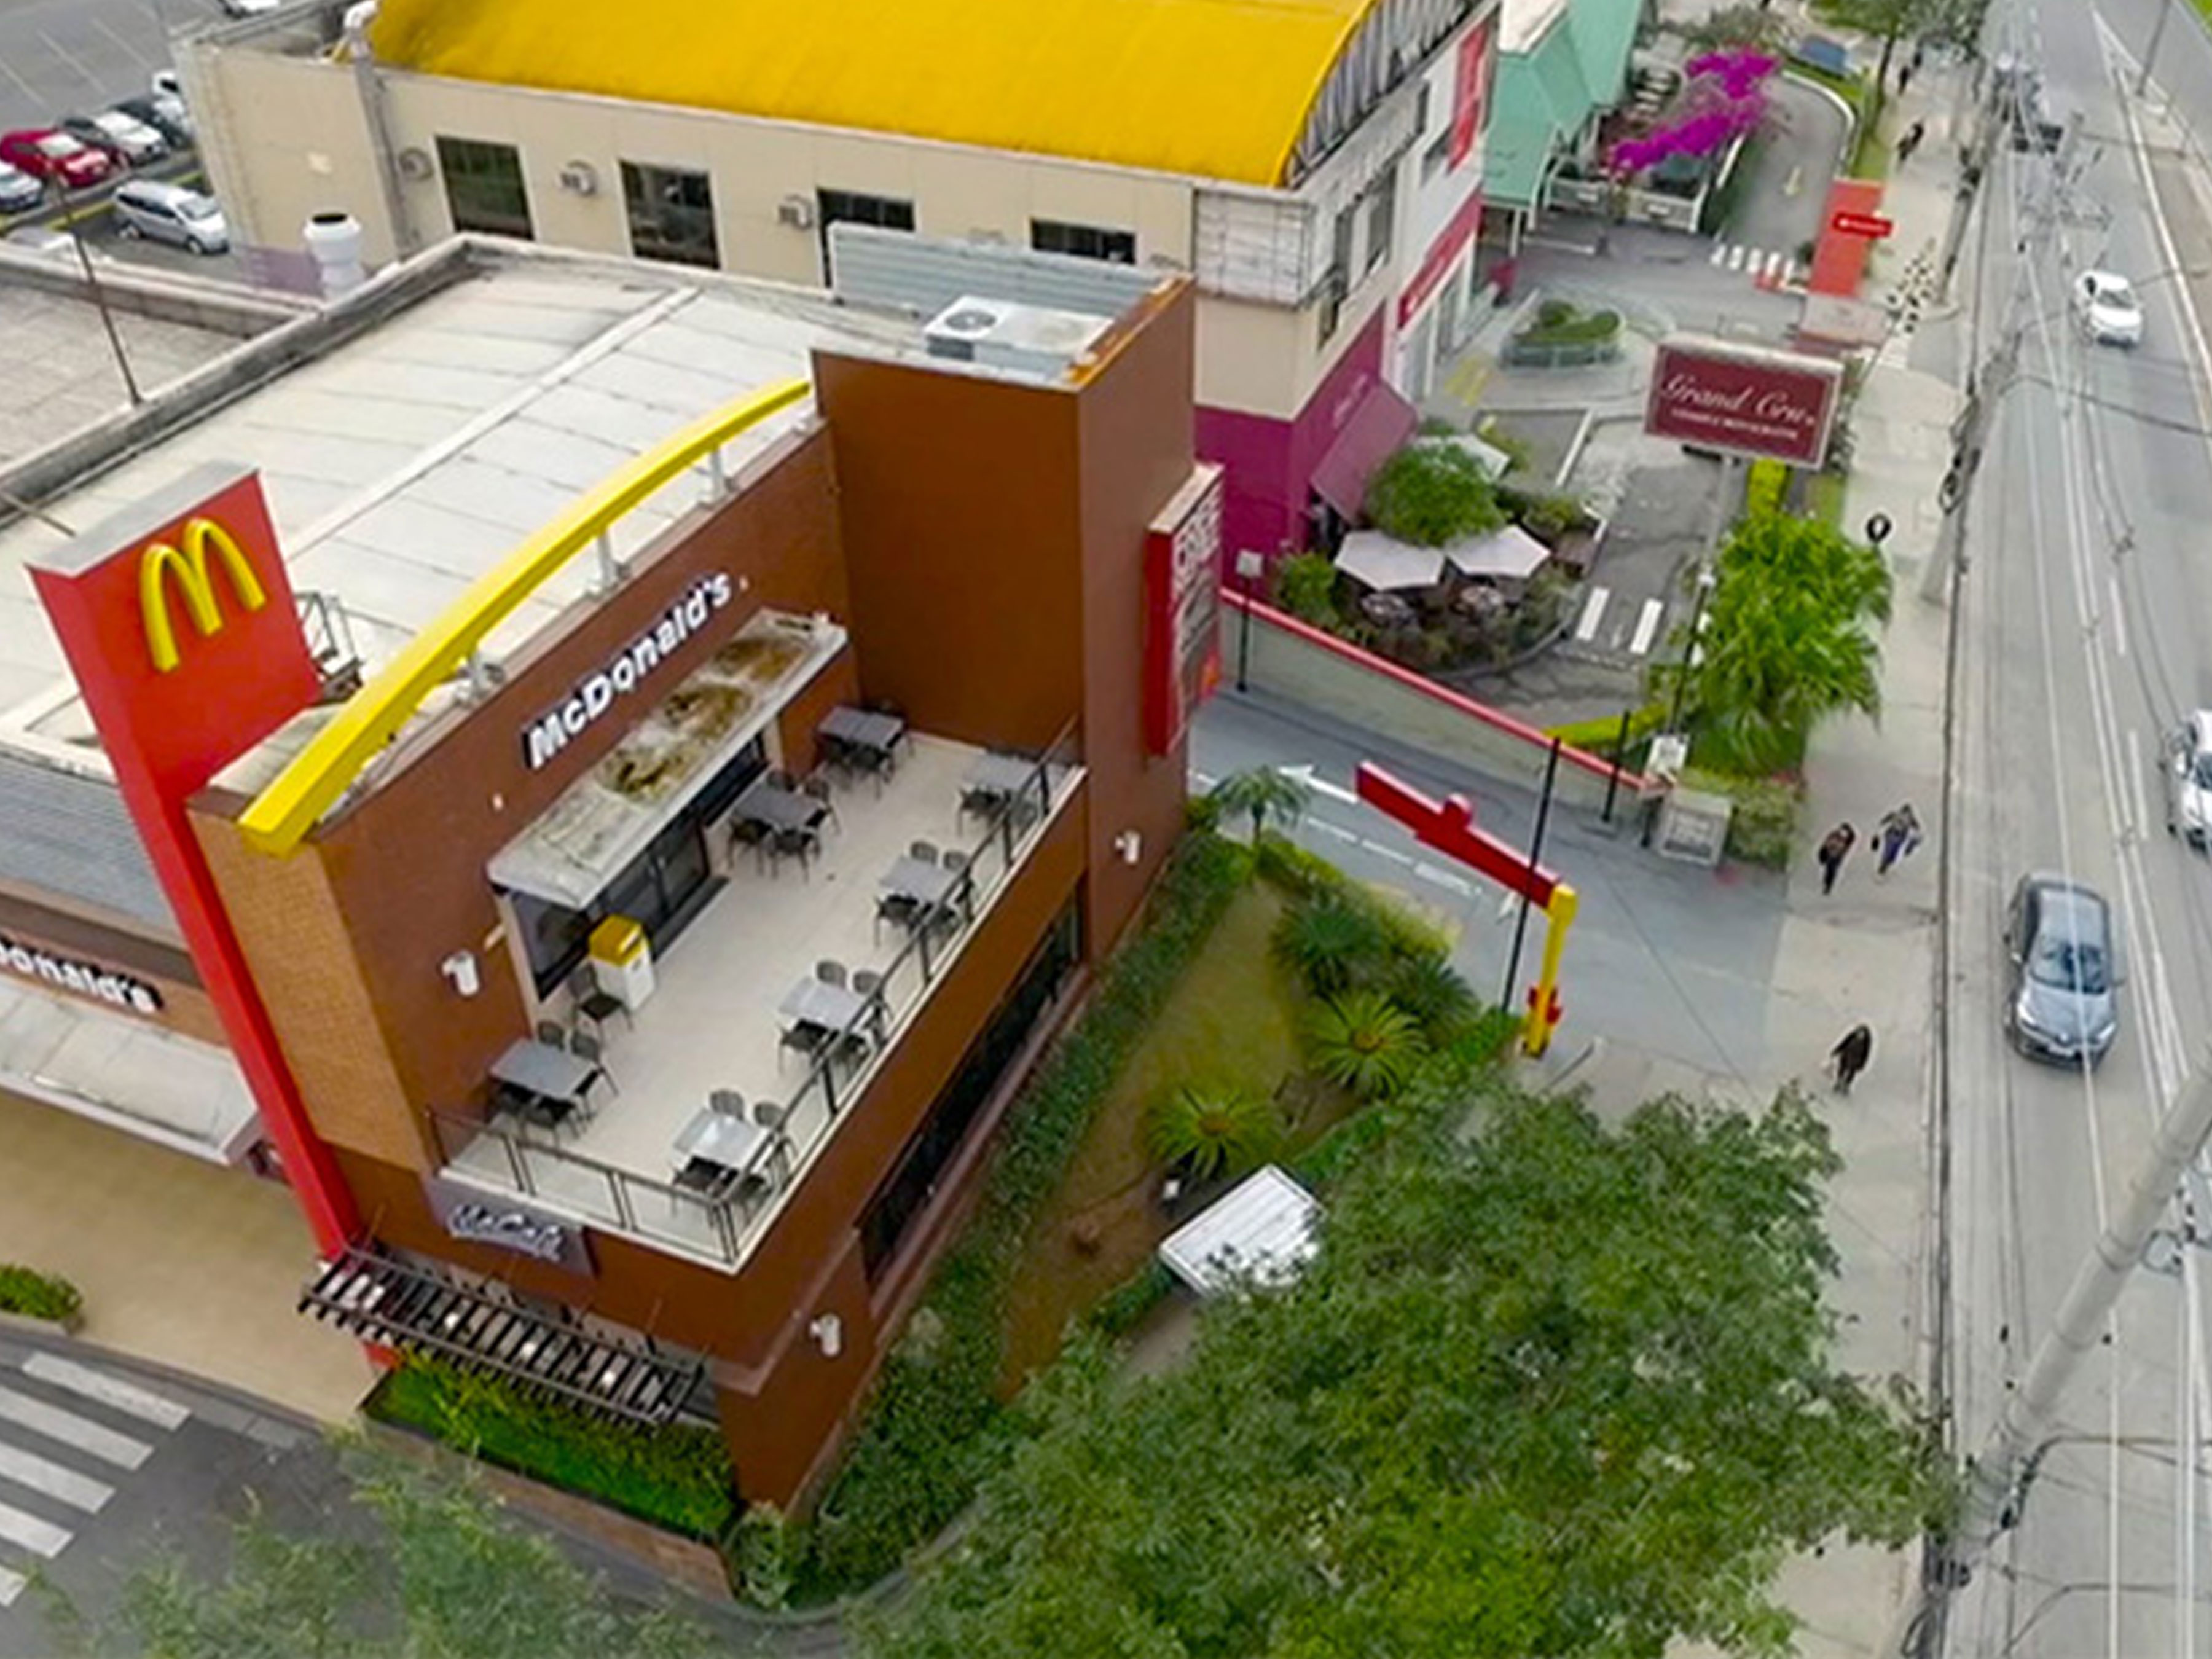 McDonald's Brazil aero picture, video screenshot